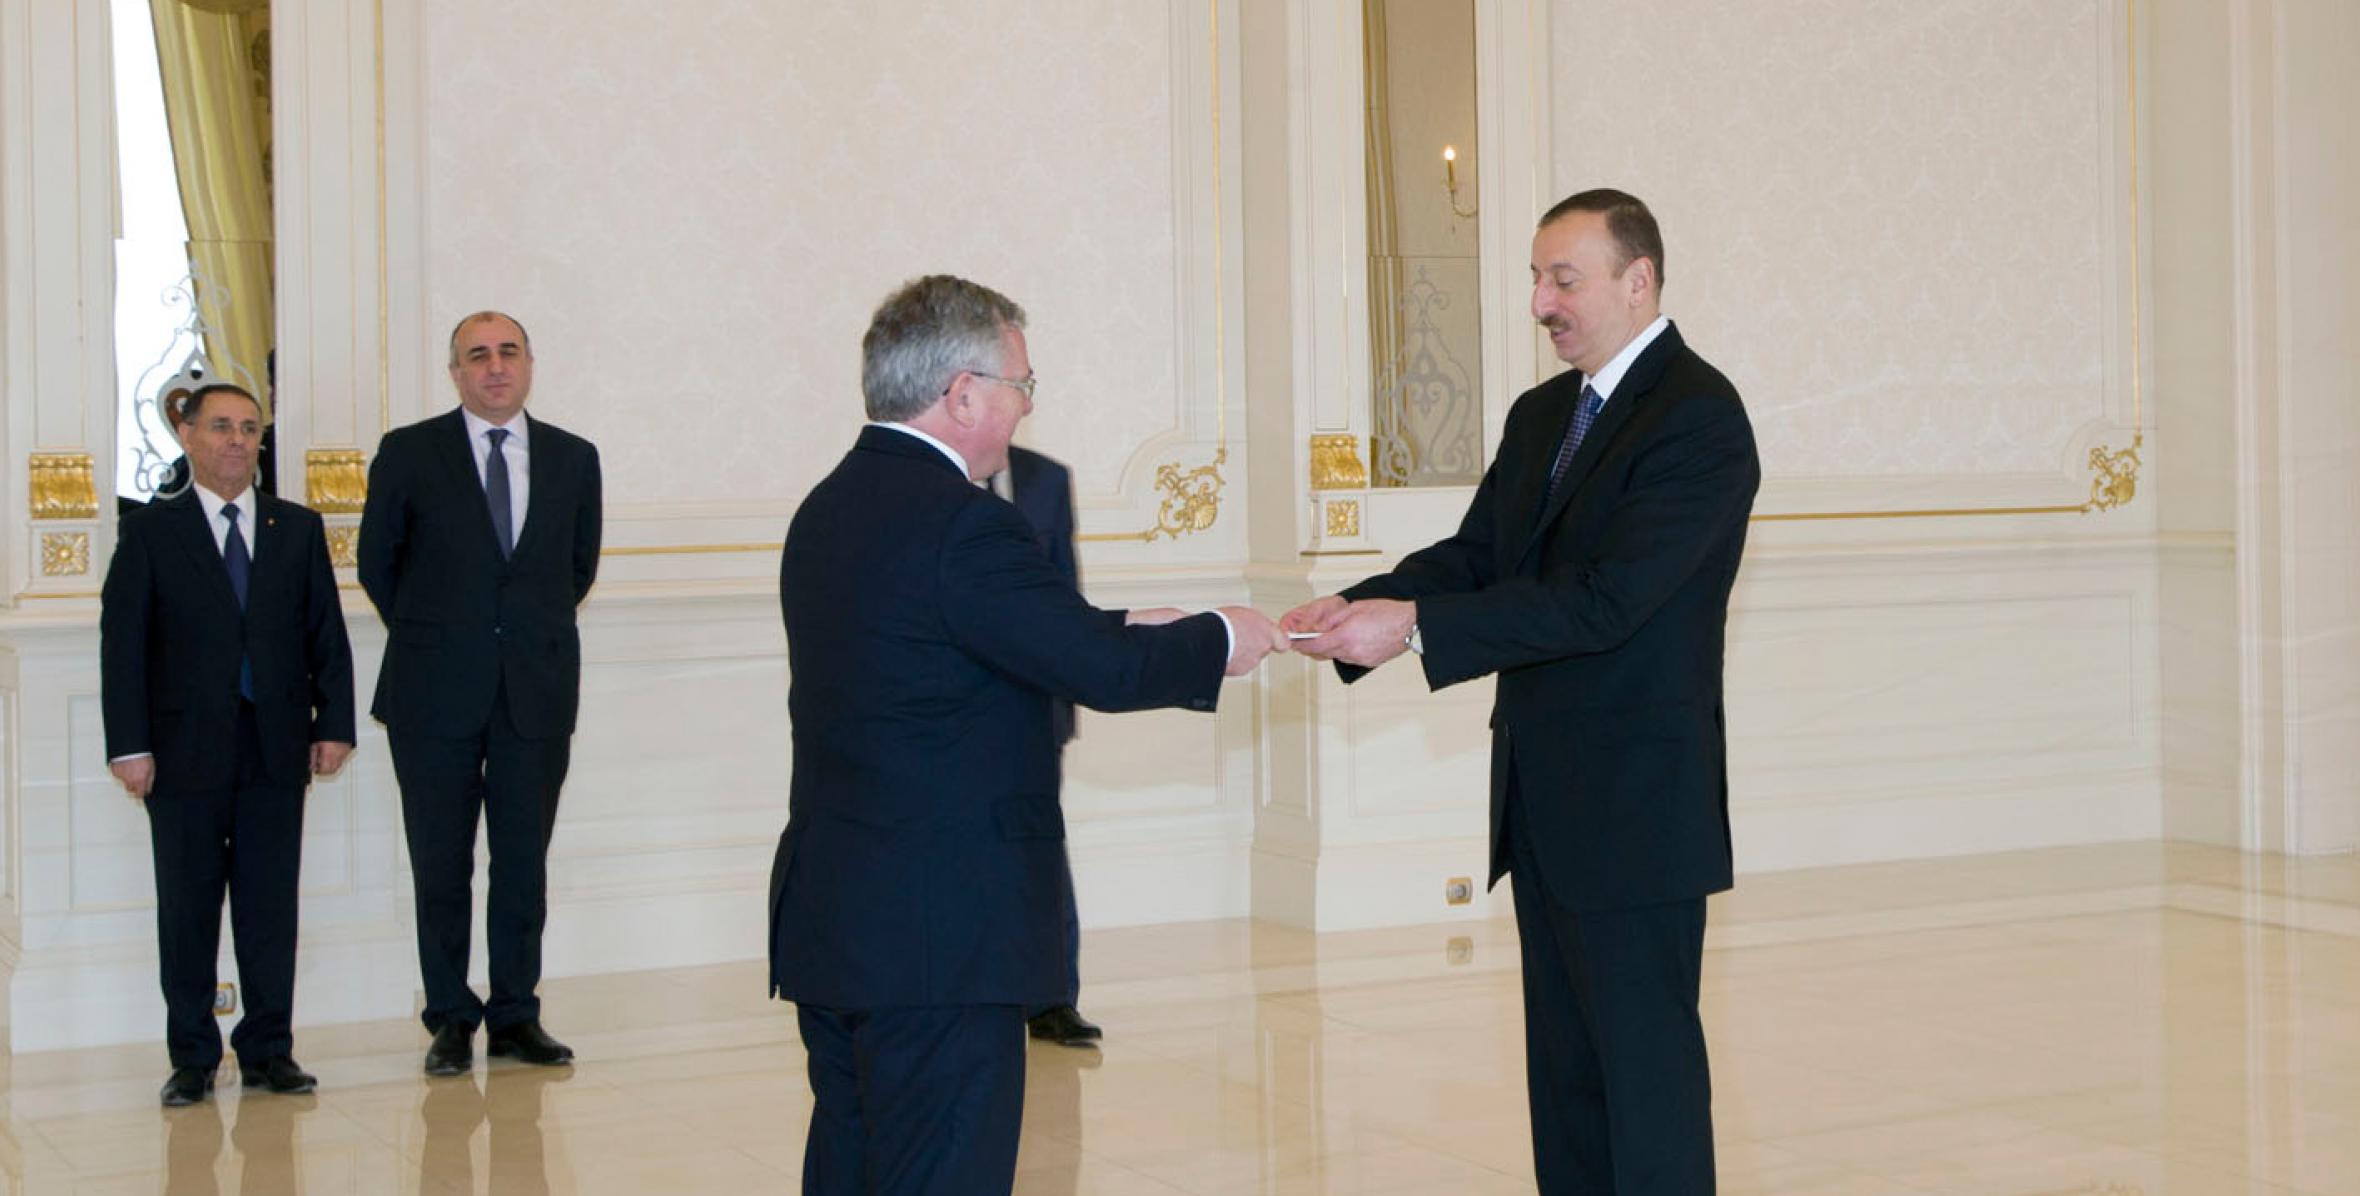 Ilham Aliyev accepted the credentials of the Ambassador of Denmark to Azerbaijan, Mr. Ruben Madsen